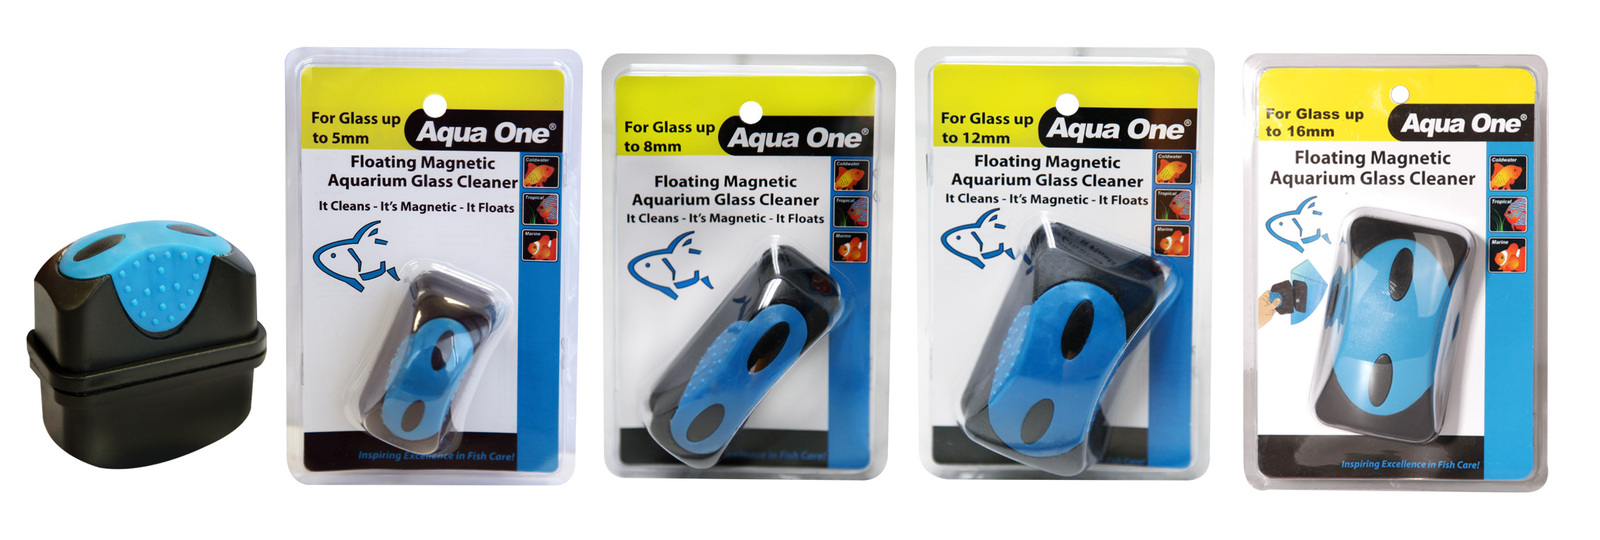 Aqua One Floating Magnet Cleaner Large